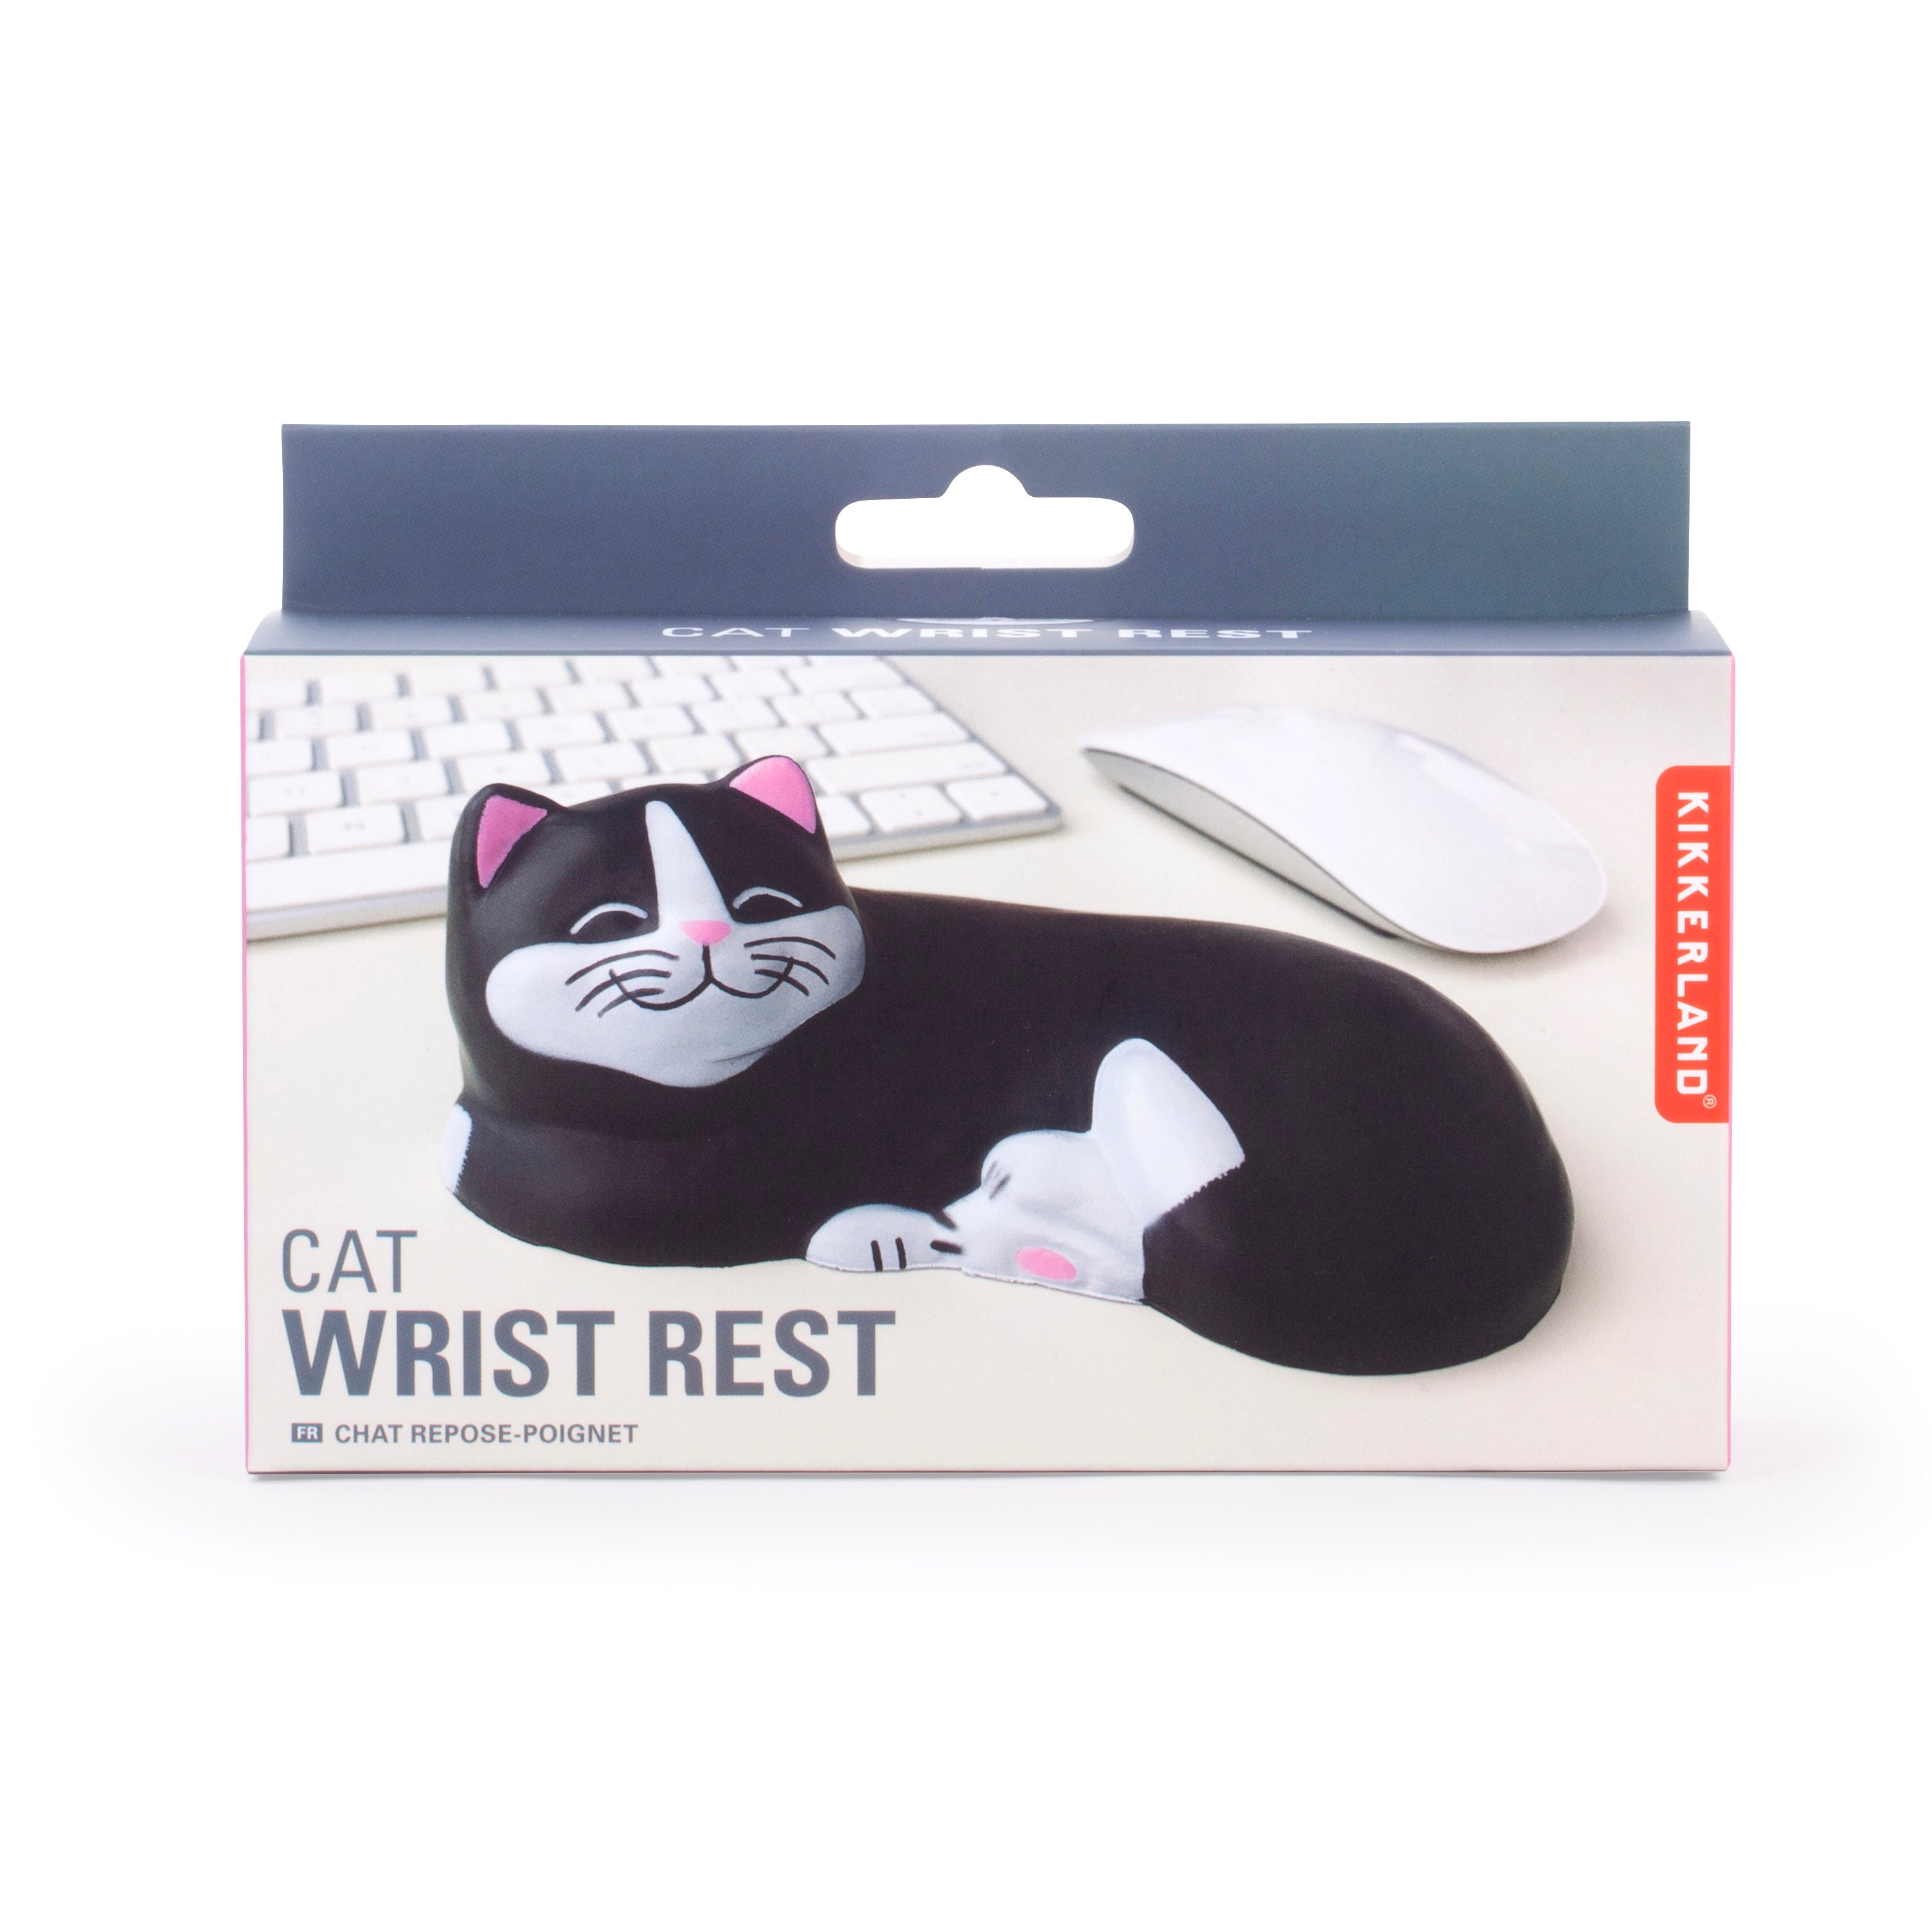 Desk Cat Wrist Rest